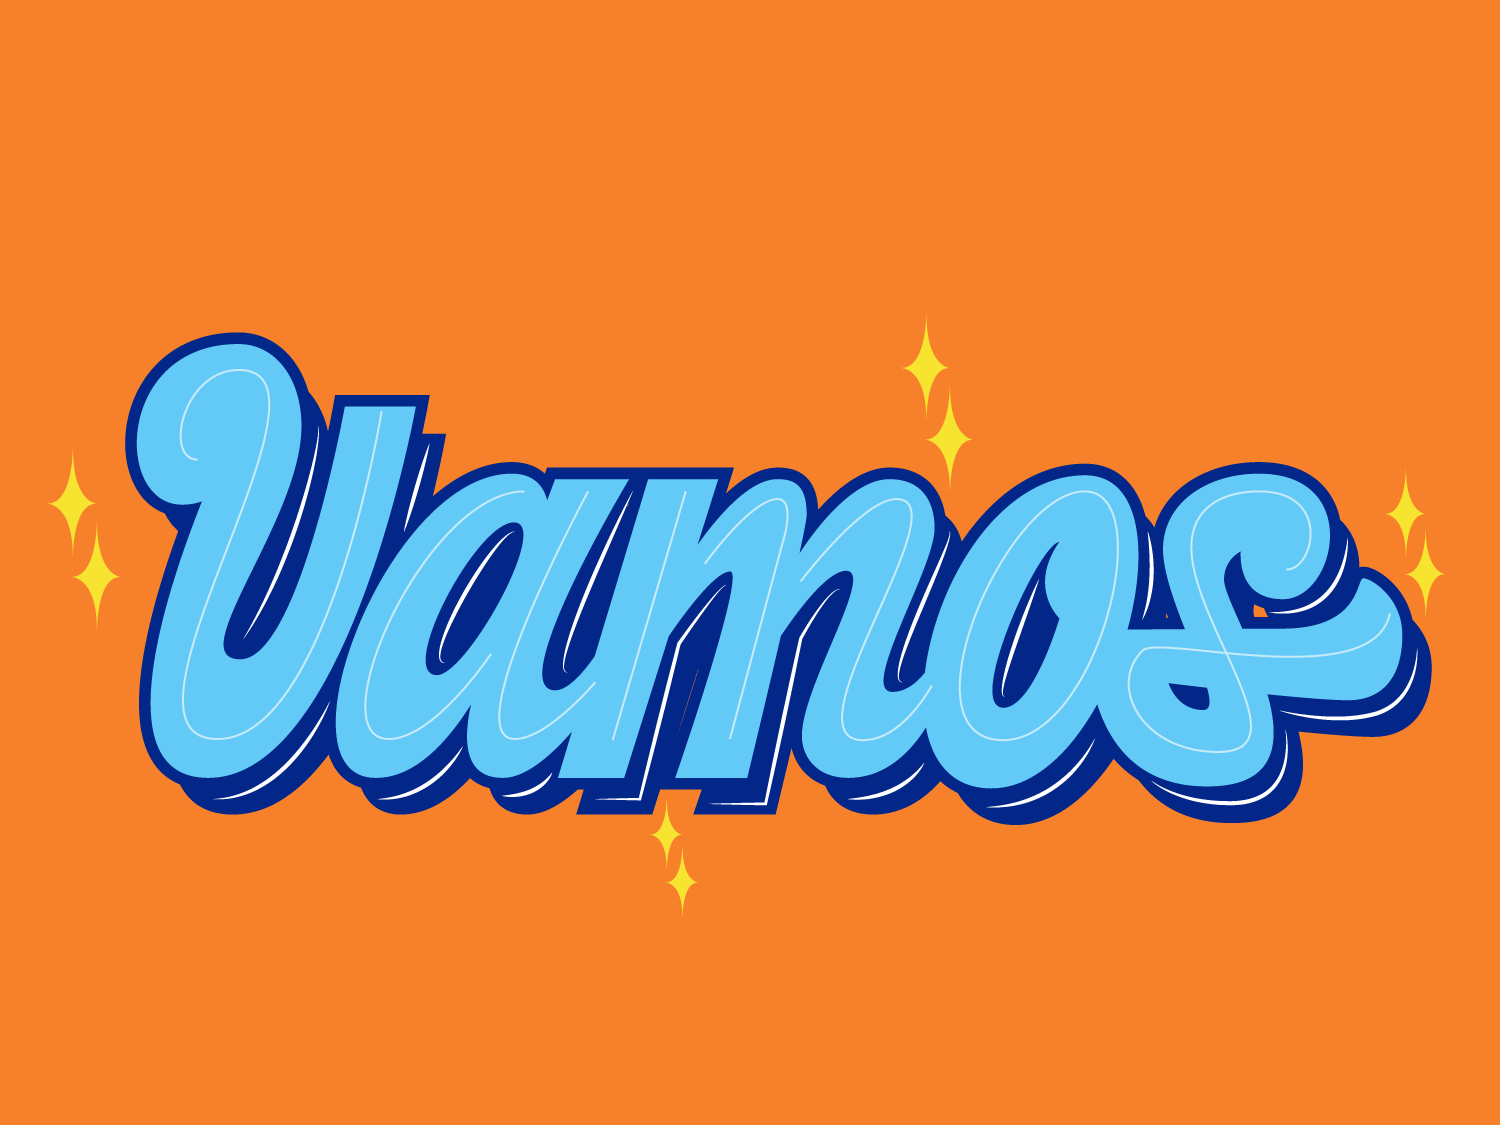 Vamos by Daniel Avila on Dribbble